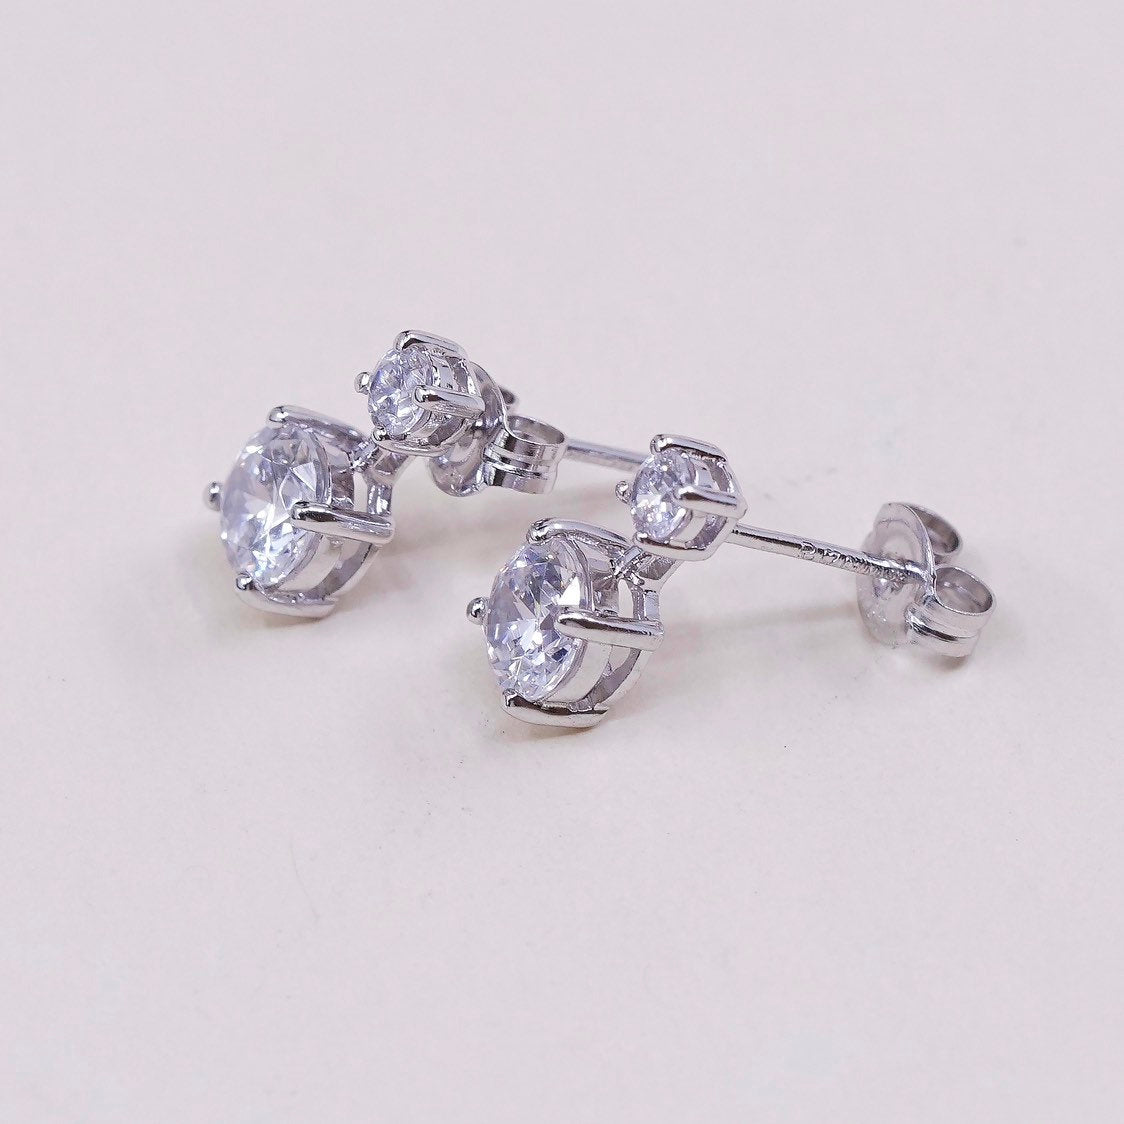 VTG sterling silver genuine cz studs, fashion minimalist earrings